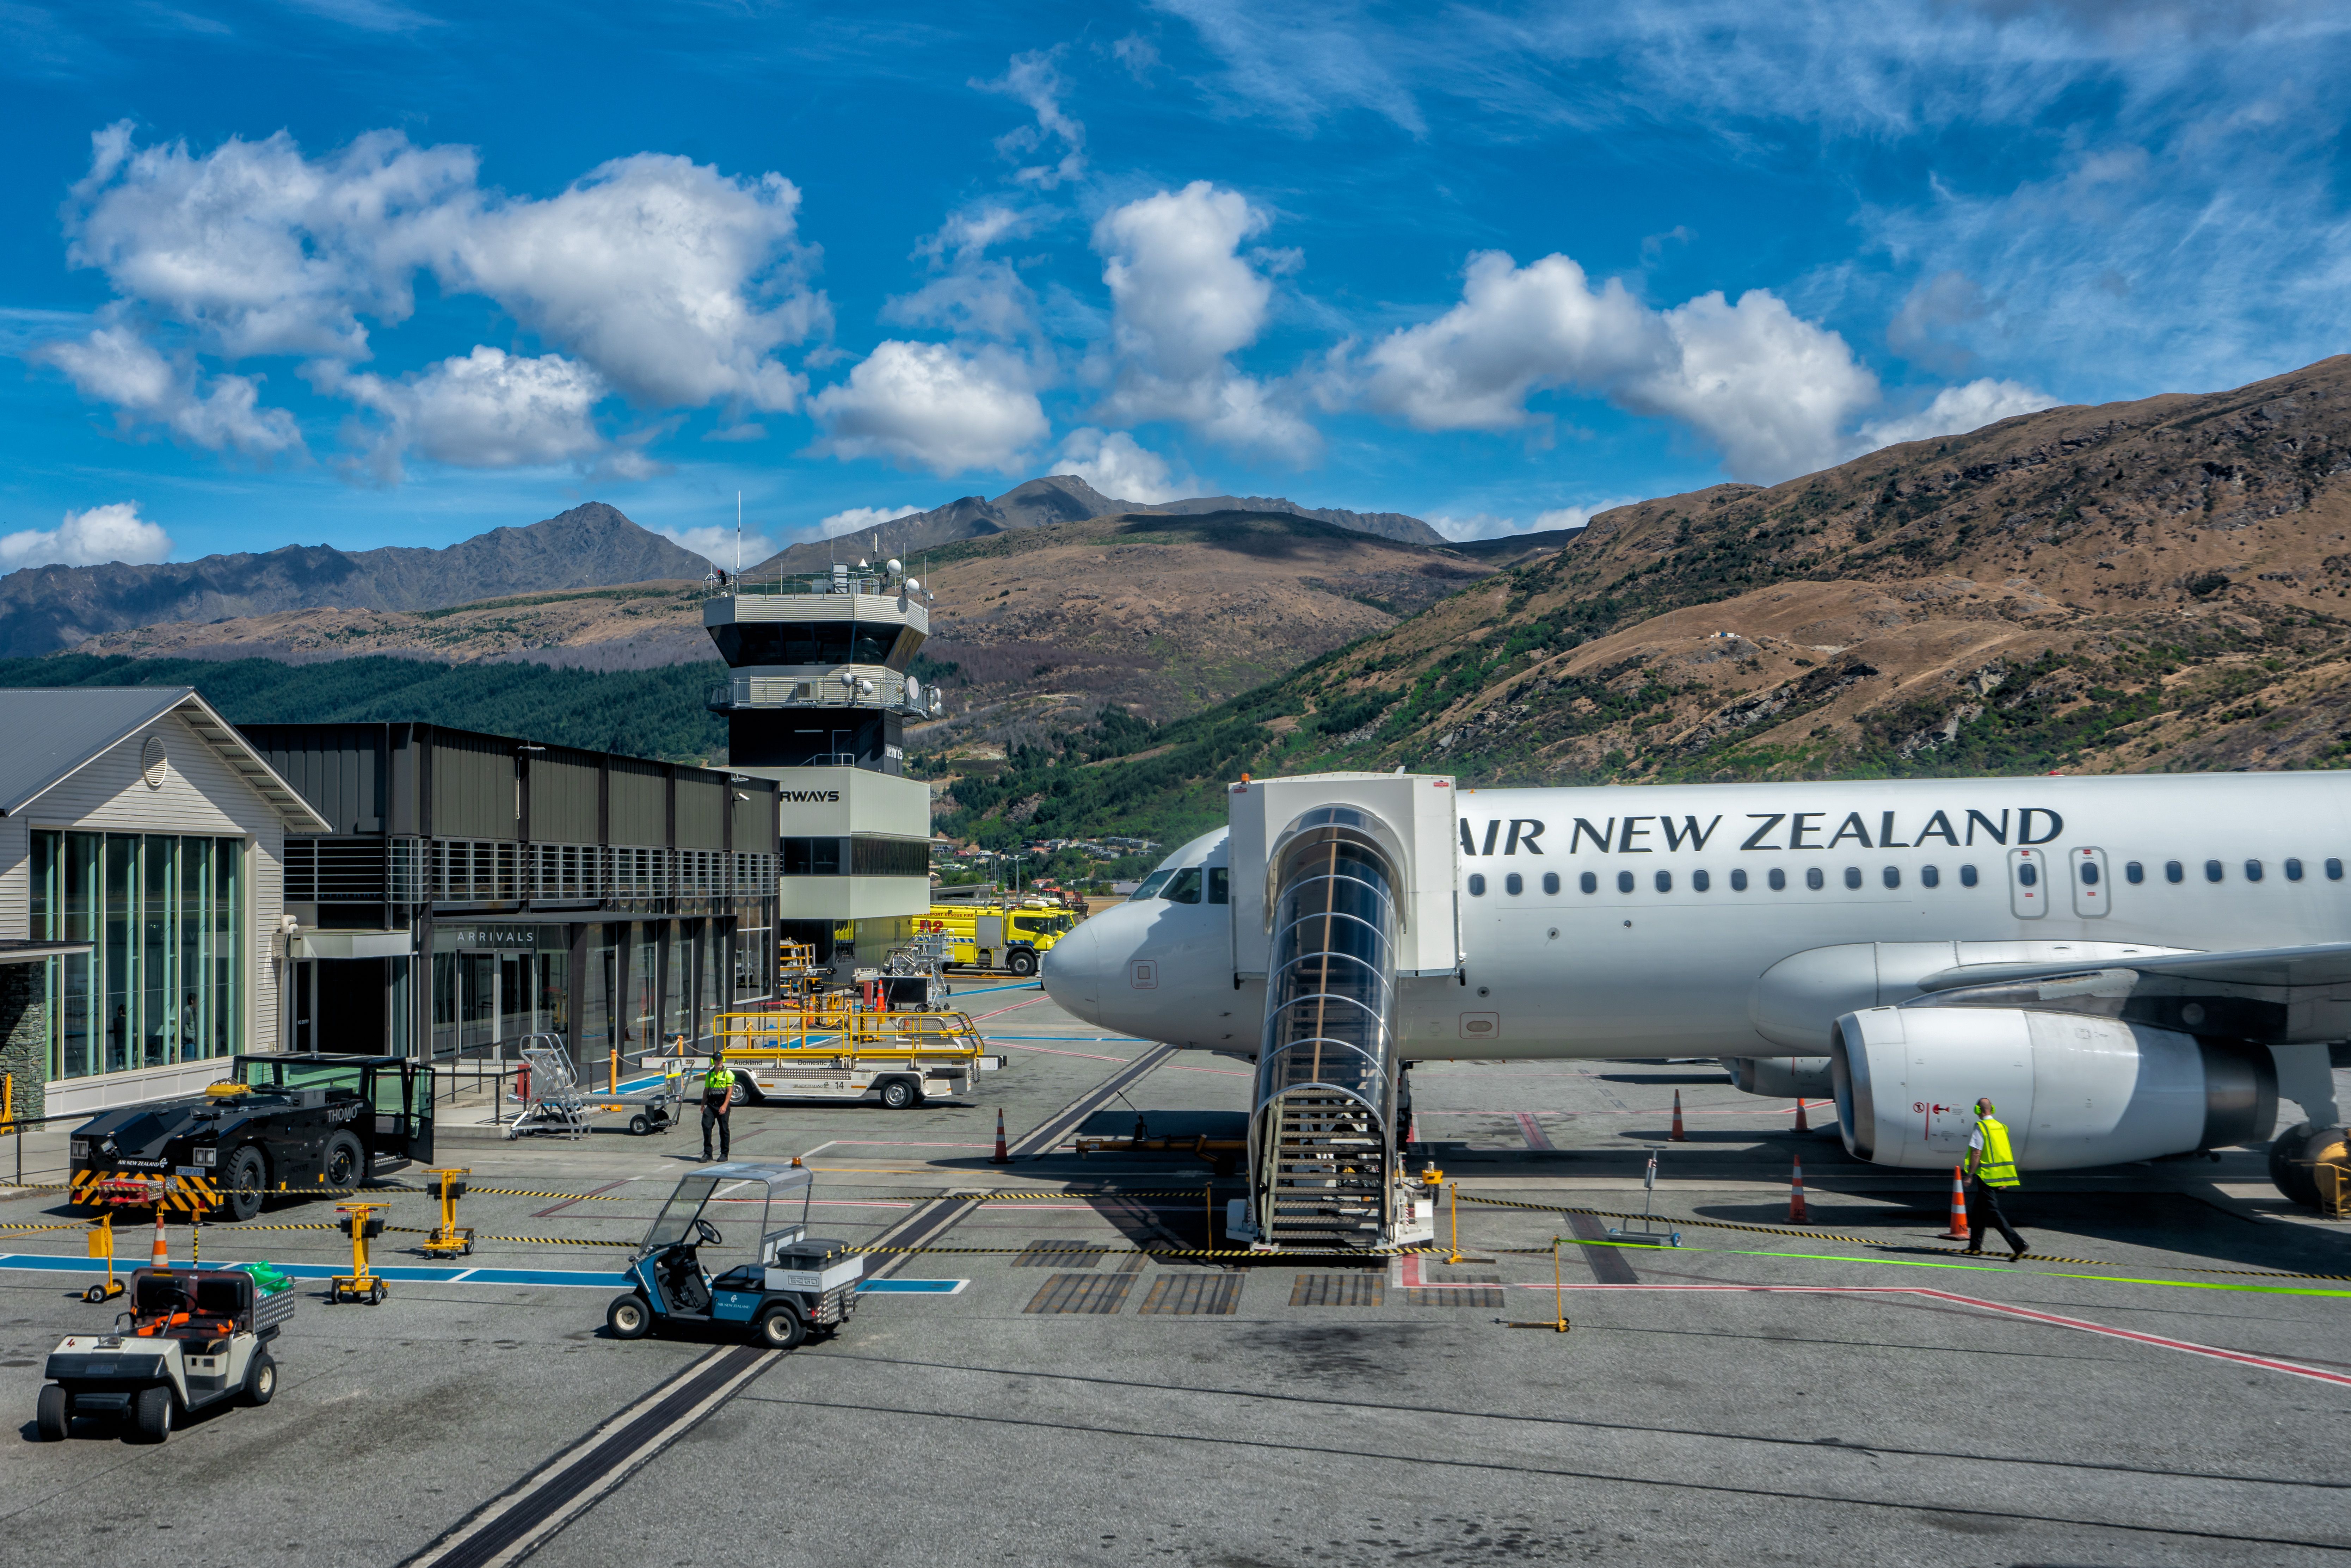 An Air New Zealand plane at Queenstown Airport (ZQN)